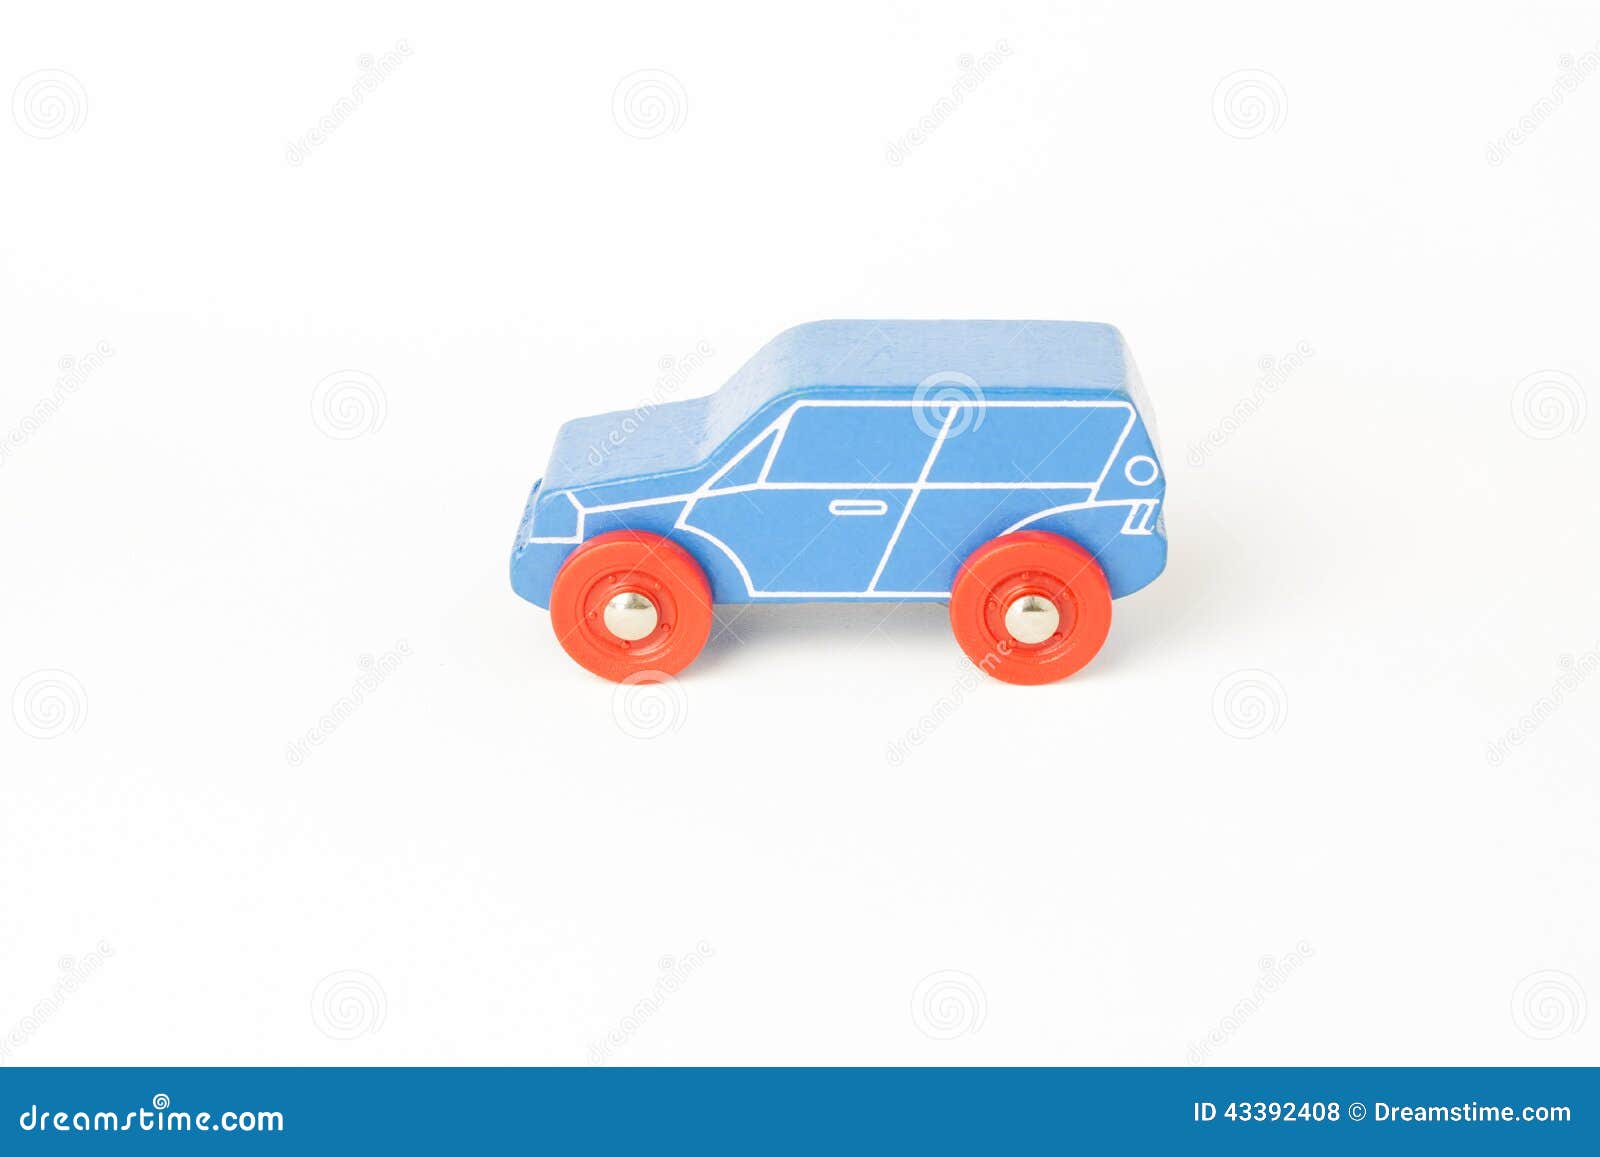 craftsman car for children